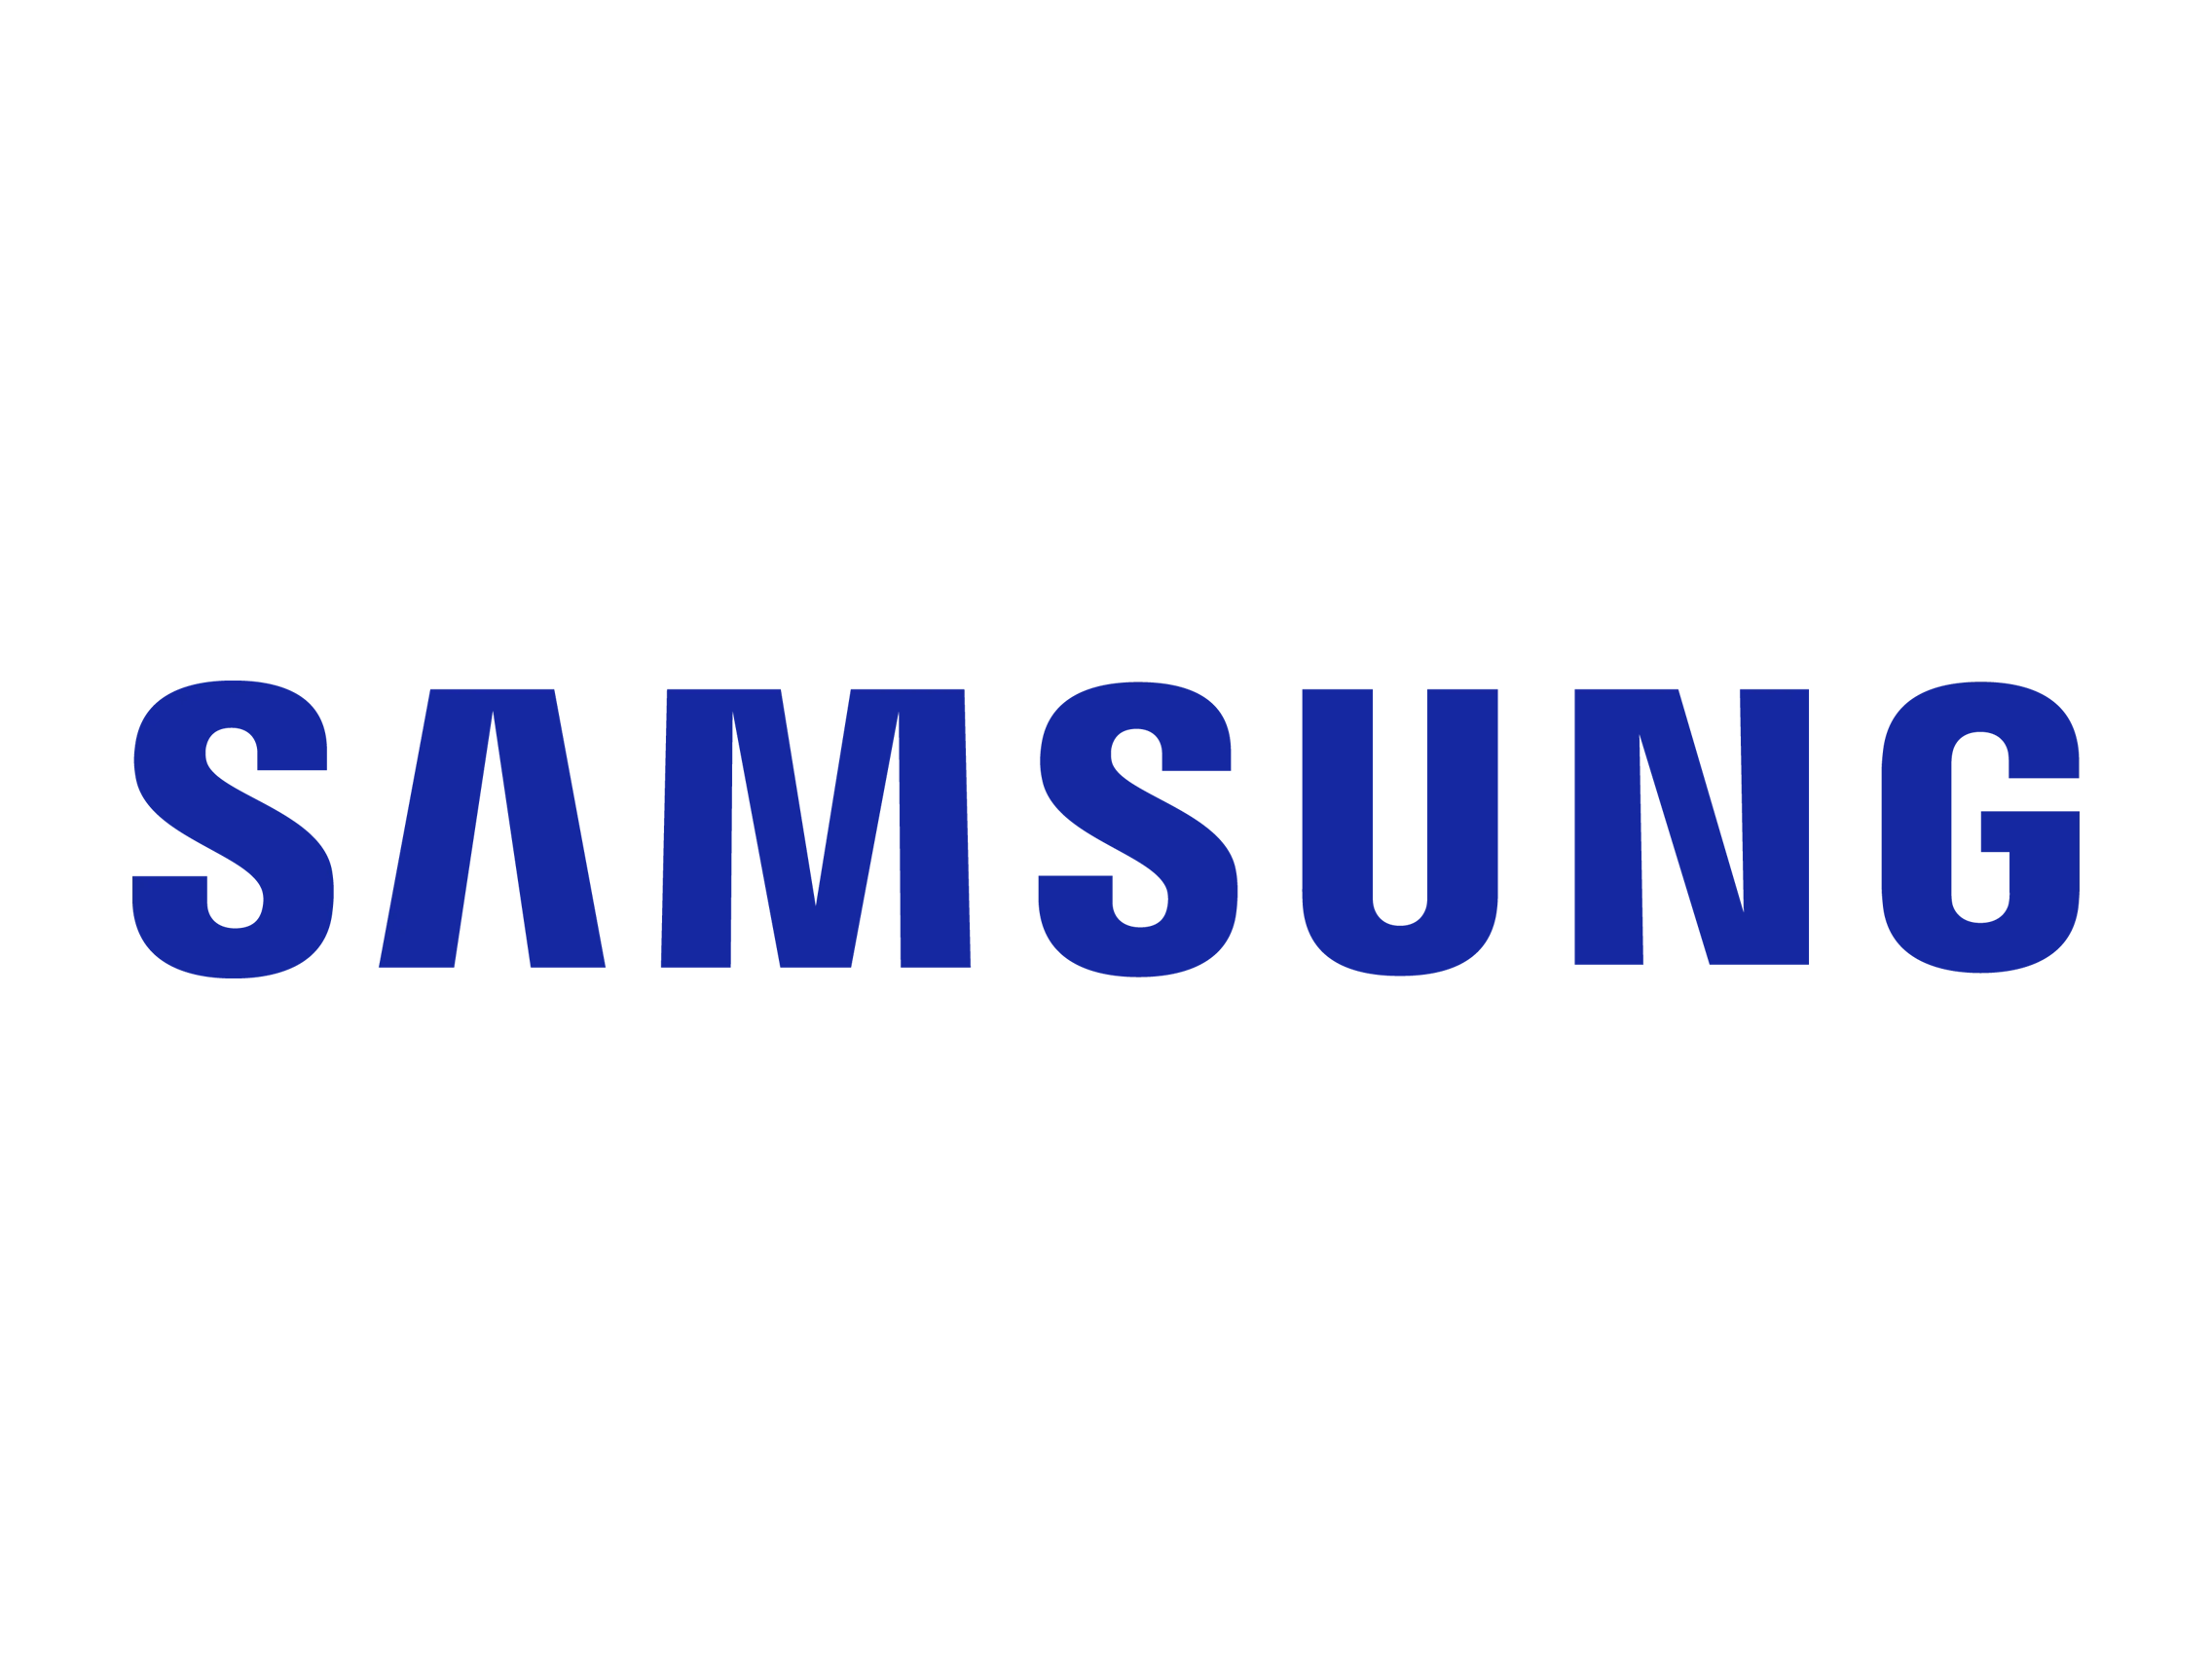 36. Samsung